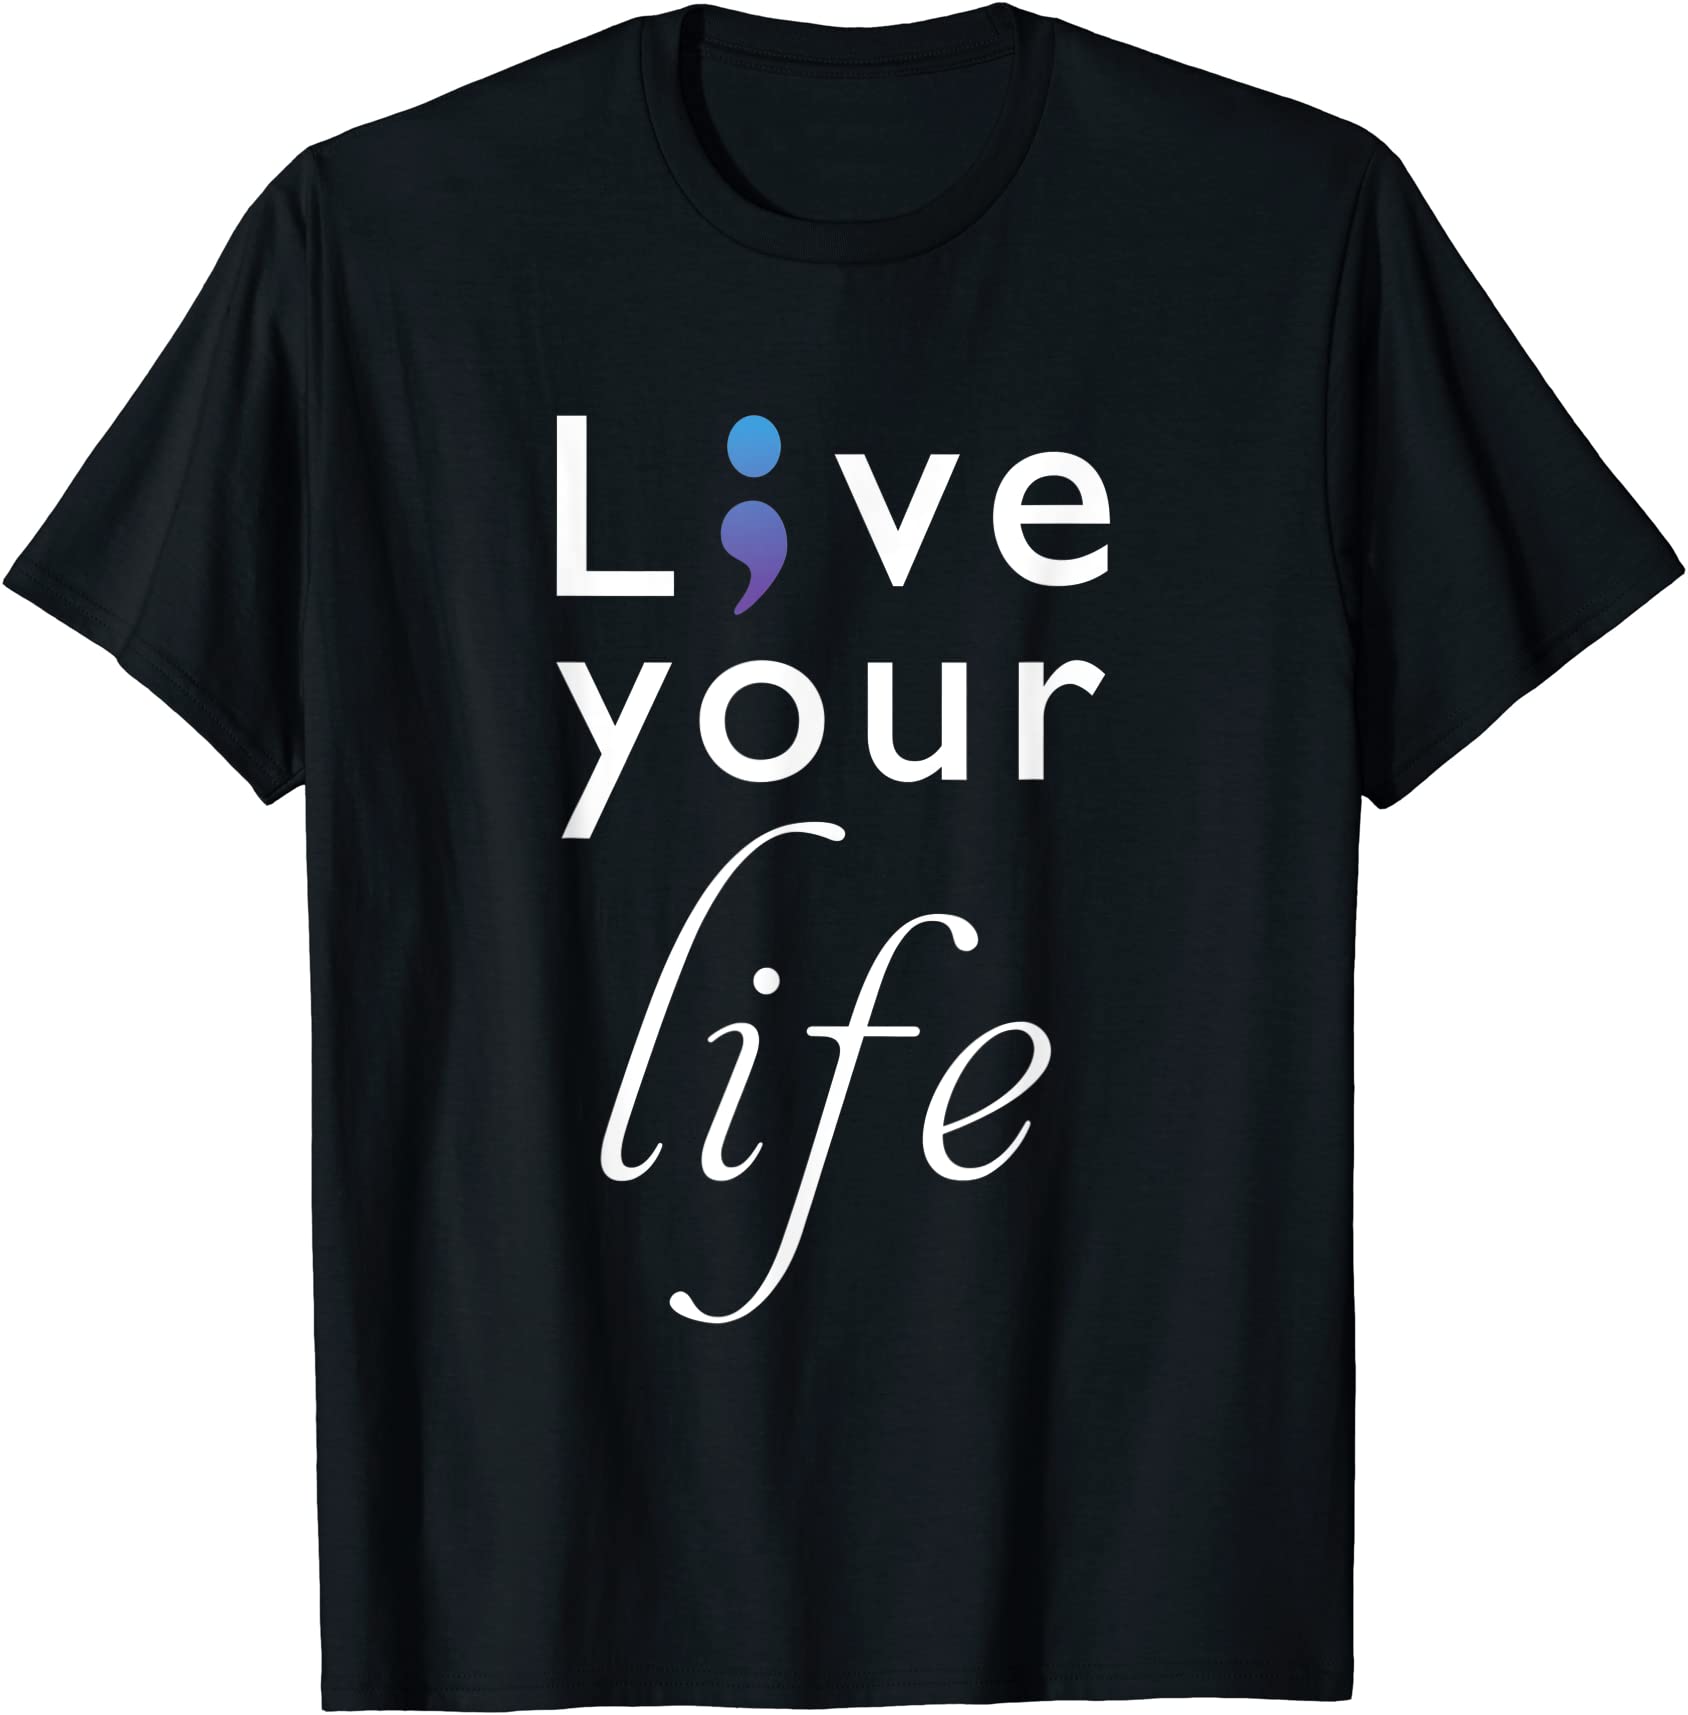 suicide prevention support teacher t shirt men - Buy t-shirt designs